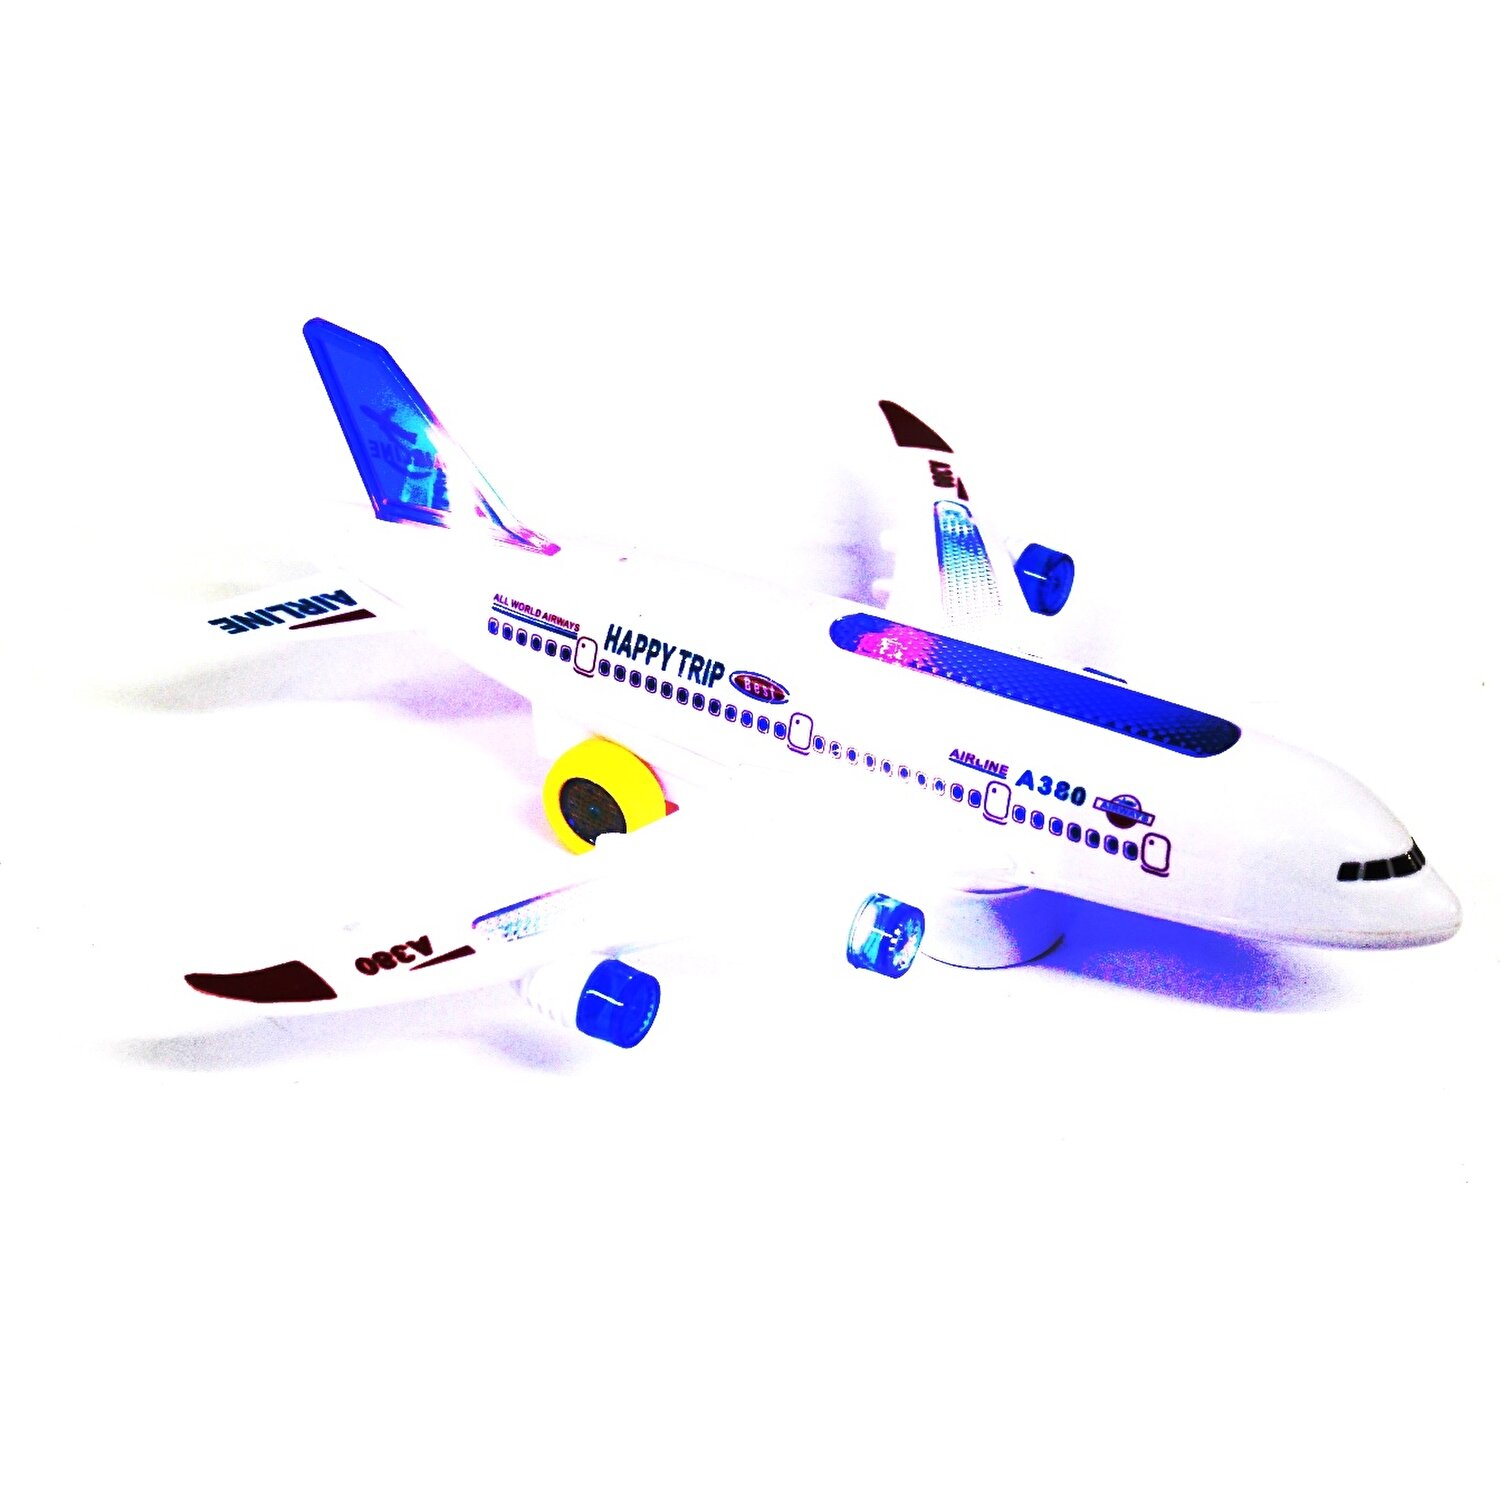 Ararat Isikli Muzikli Ucak A380 Yolcu Ucagi Fiyati